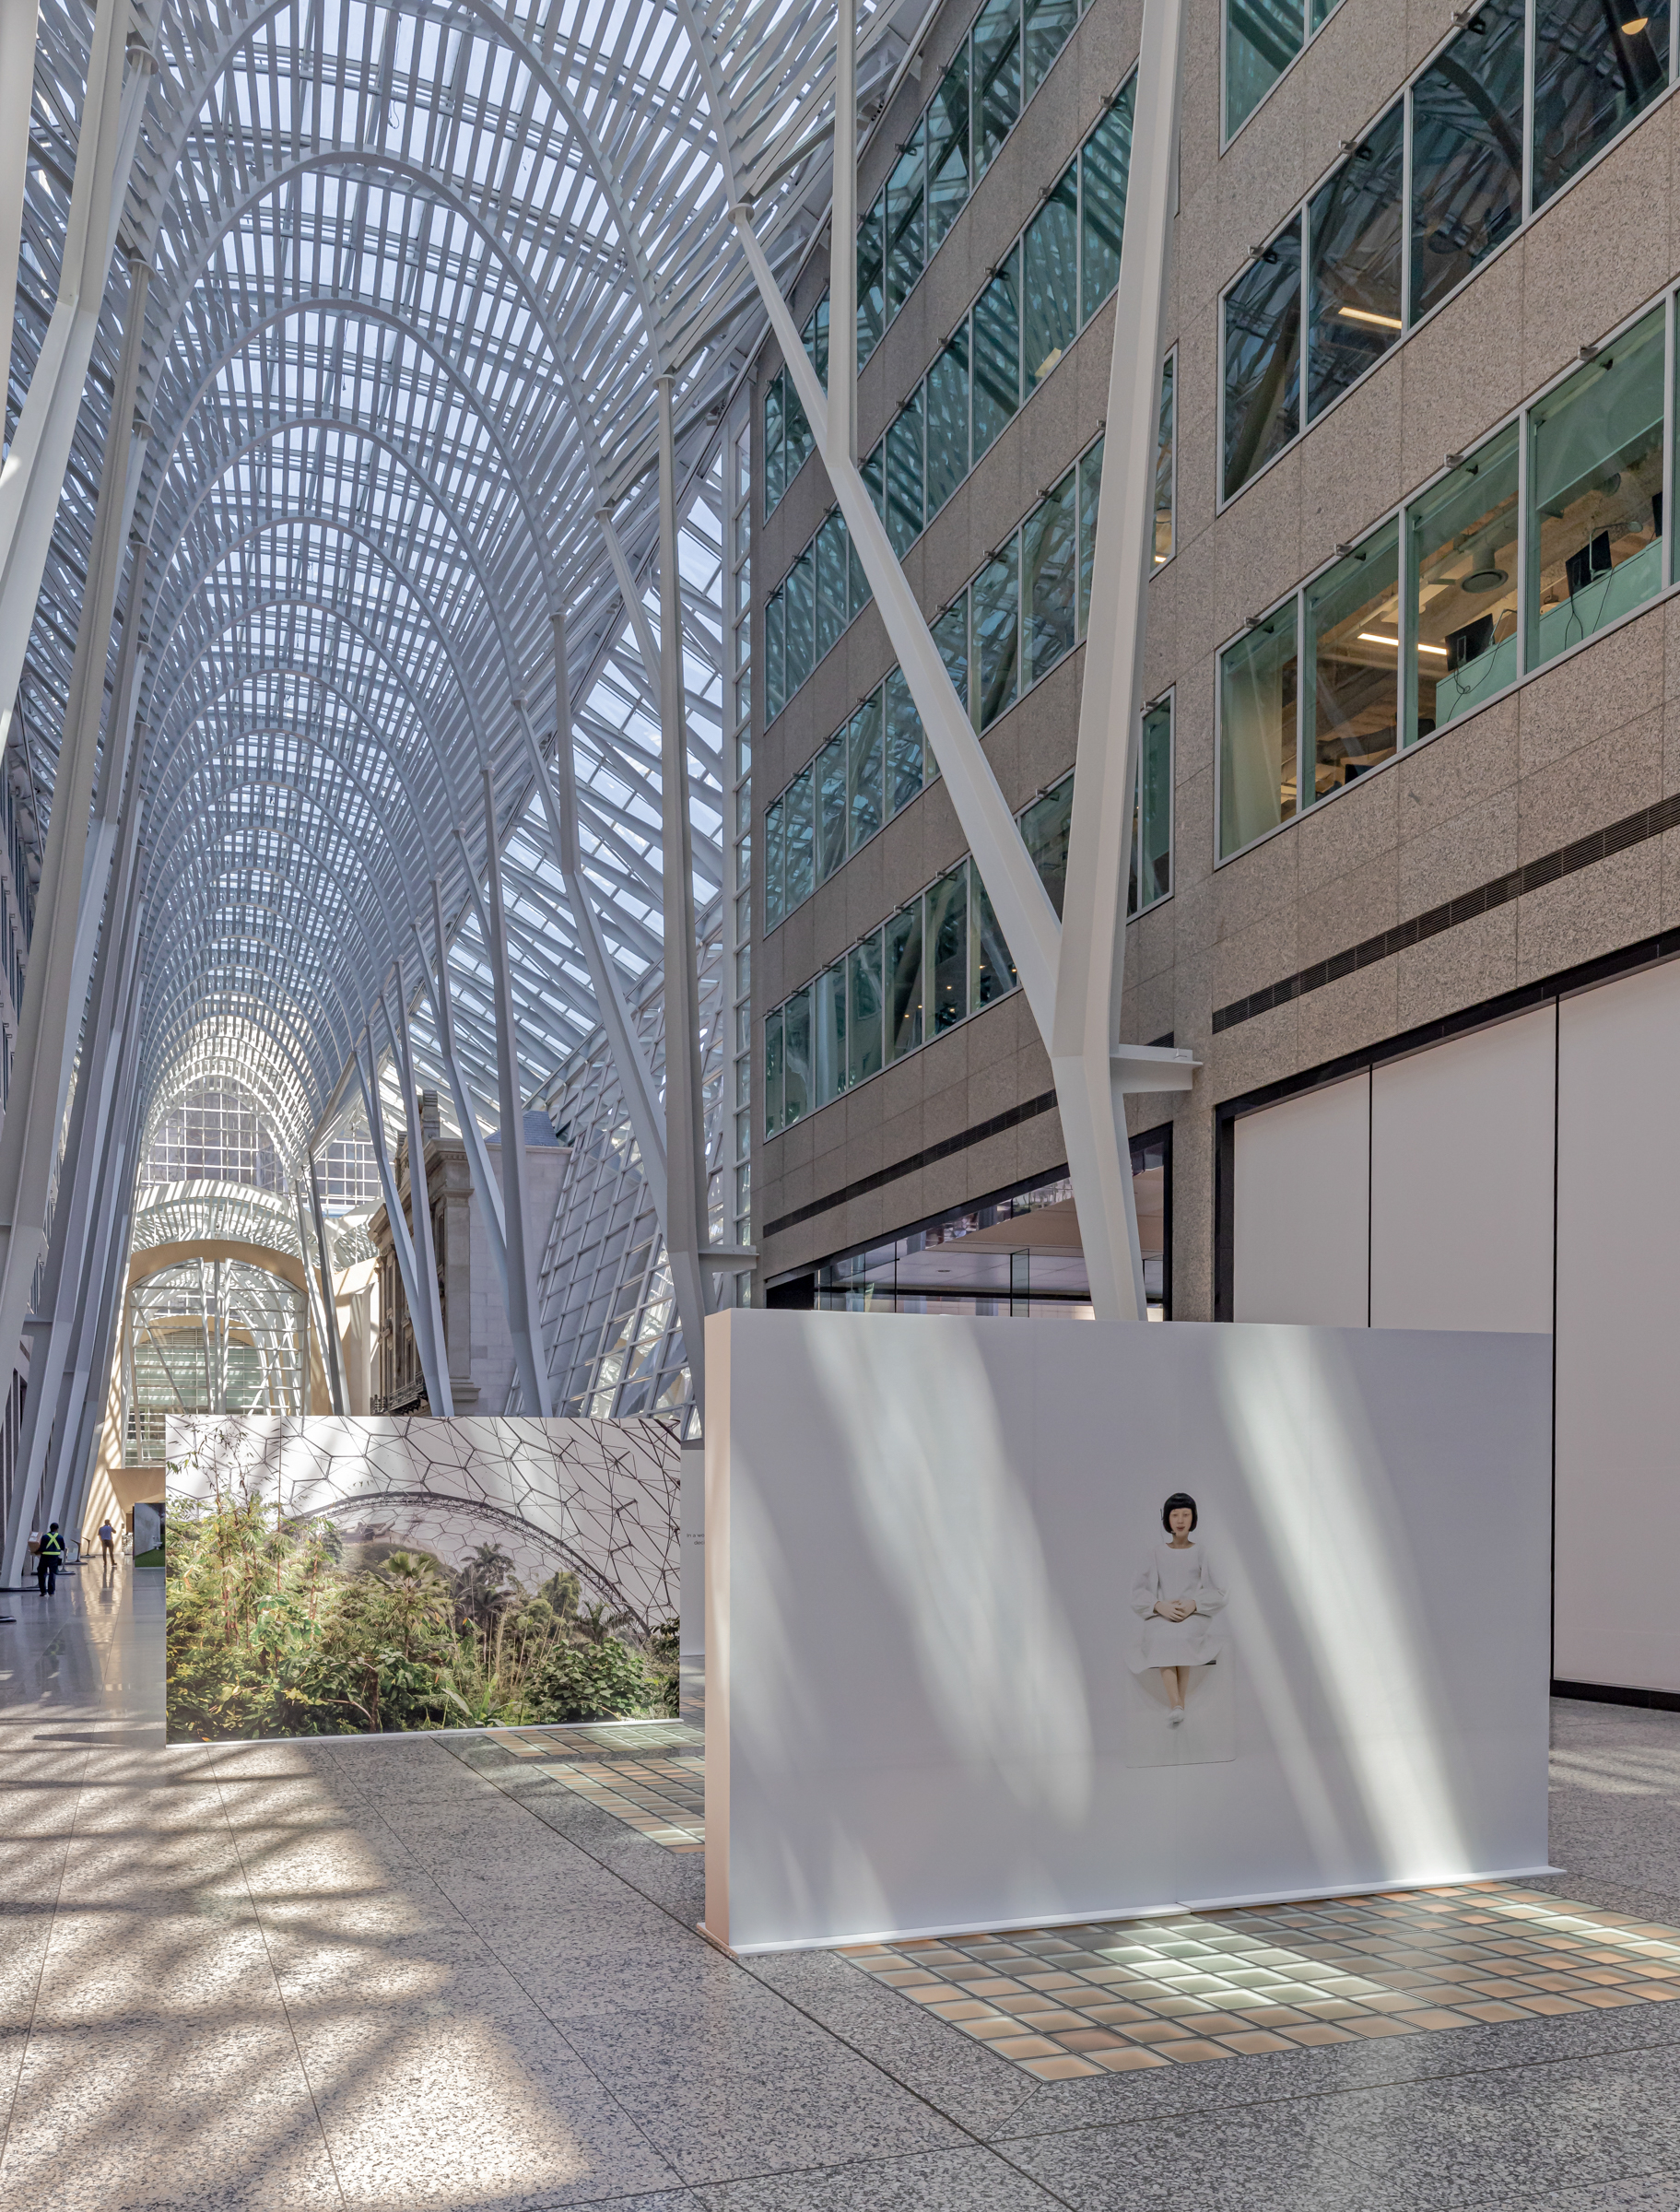     Alberto Giuliani, Surviving Humanity, installation at Brookfield Place, Allan Lambert Galleria, Toronto, 2022. Courtesy of the artist and CONTACT. Photo: Toni Hafkenscheid

